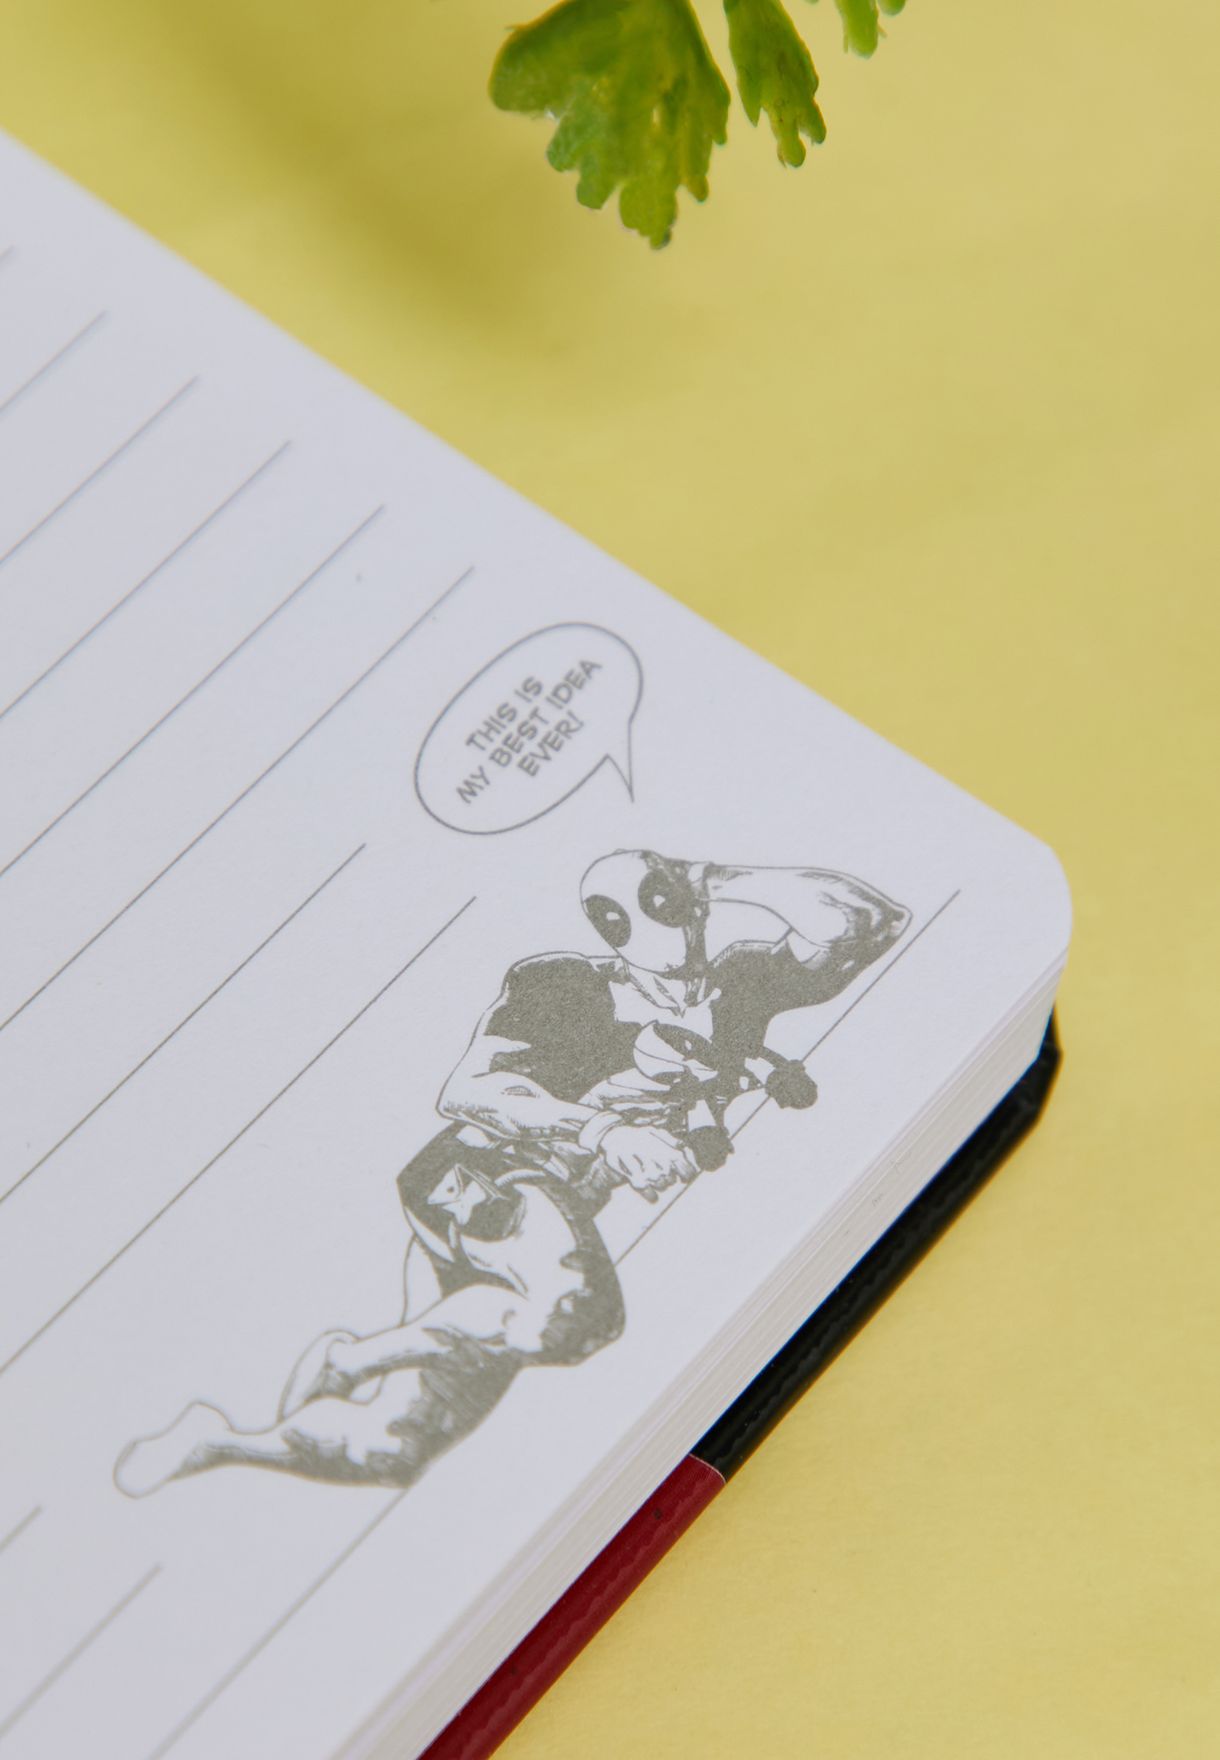 Marvel Deadpool A5 Notebook